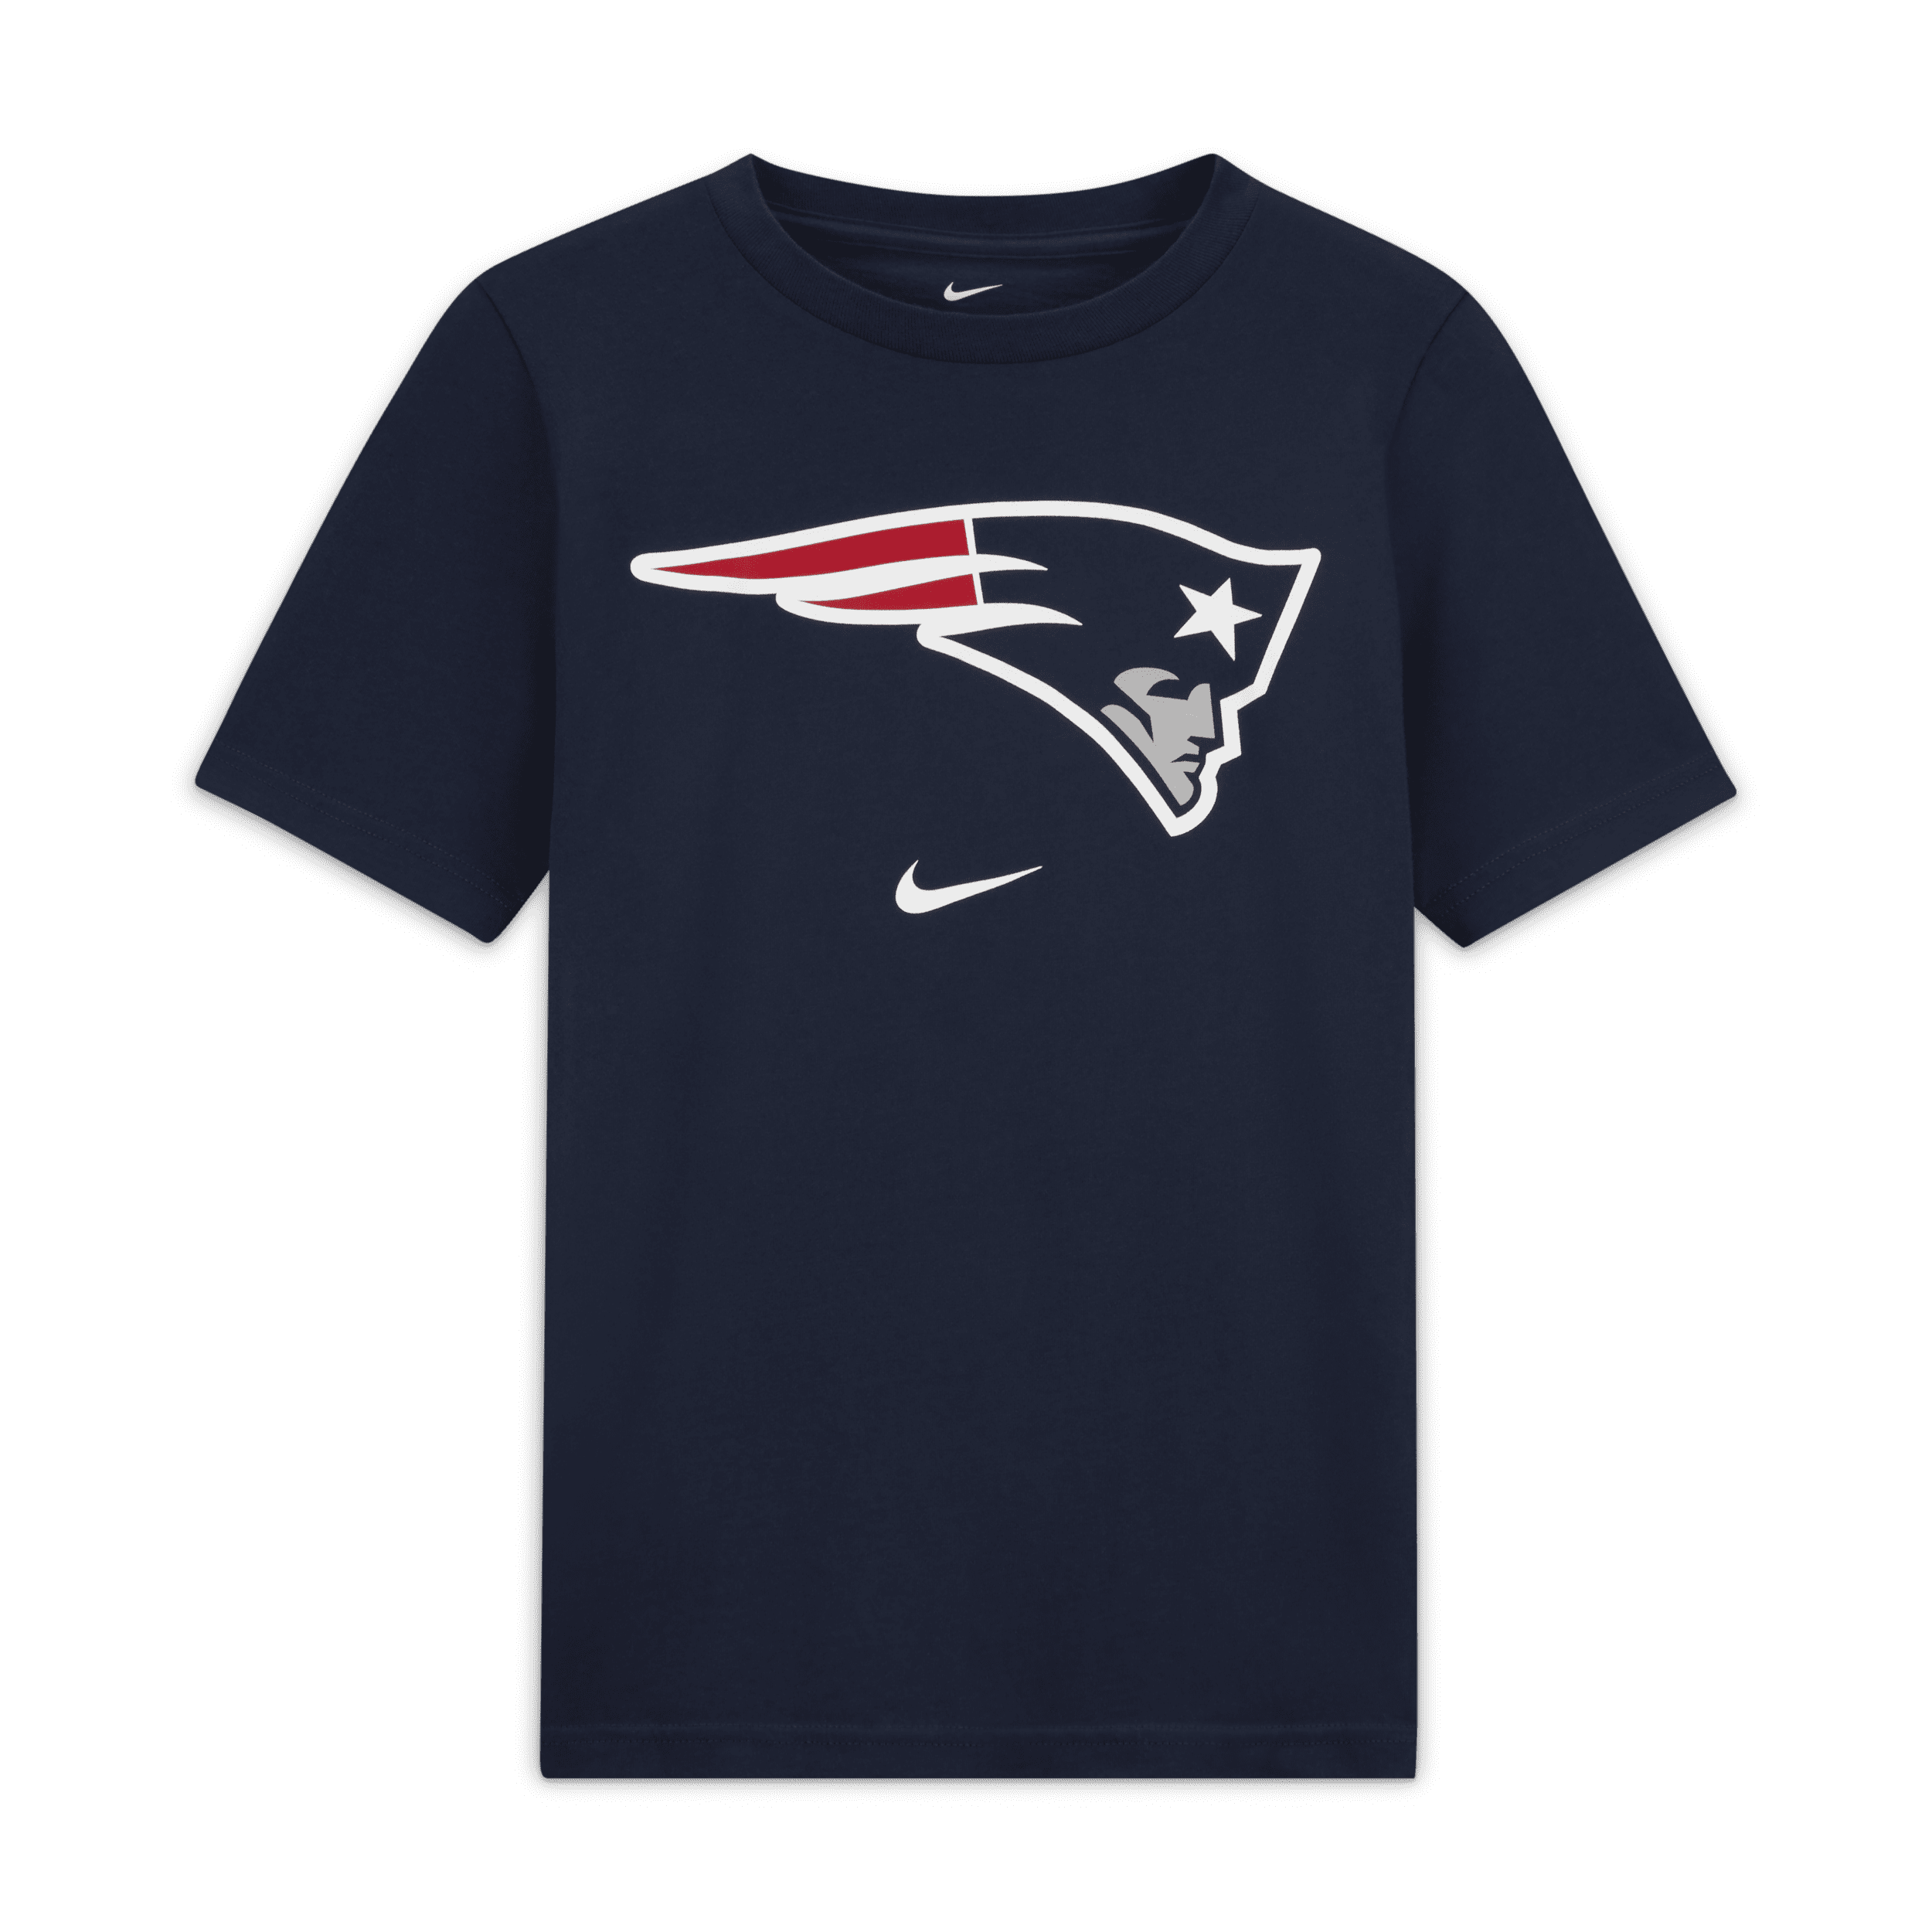 Nike (NFL New England Patriots) Camiseta - Niño/a - Azul